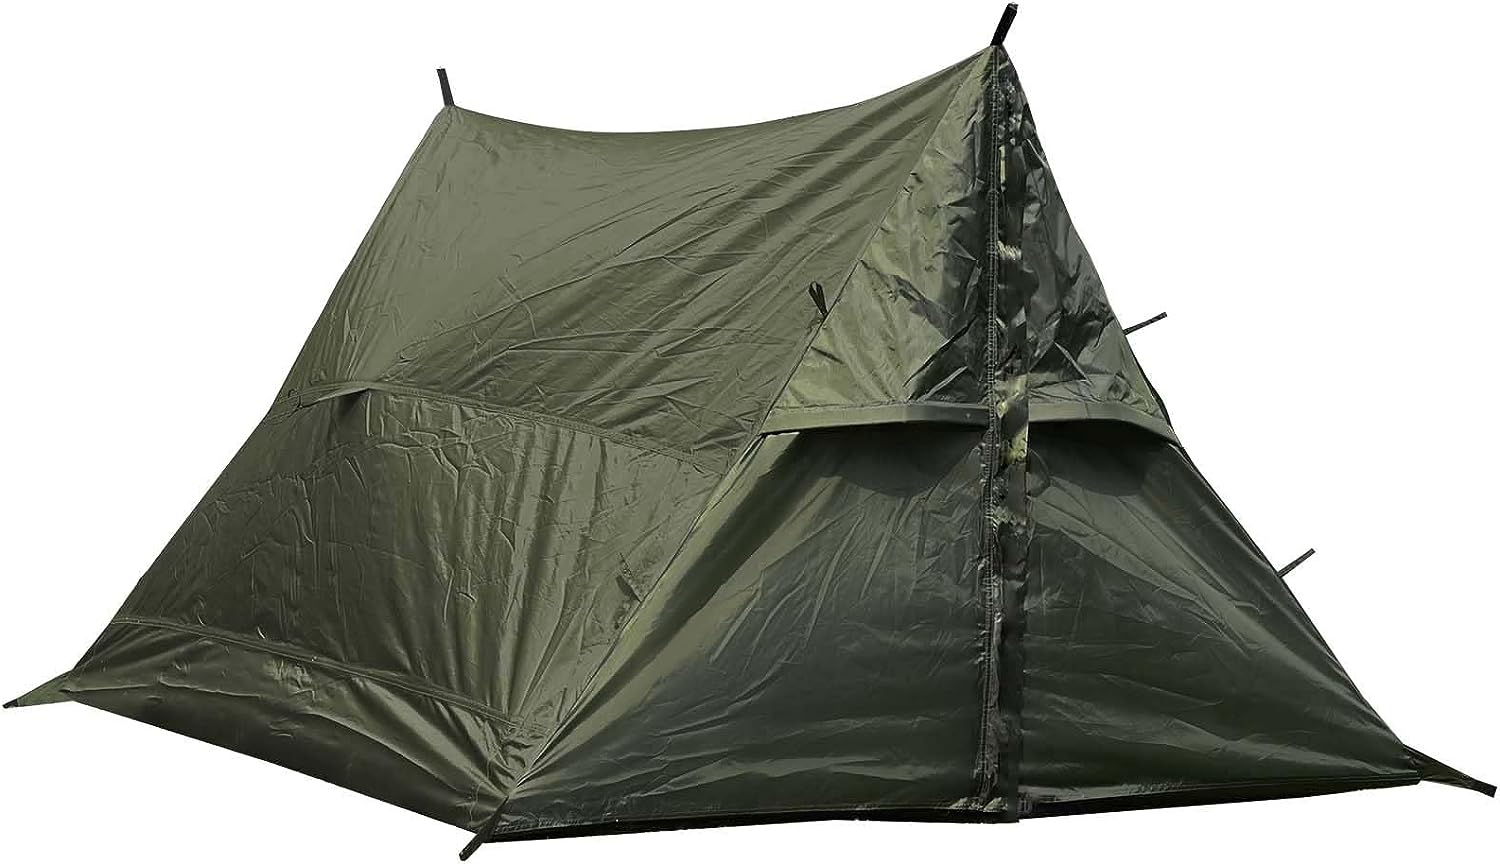 waldzimmer ridge tent green polyester backpacking tent